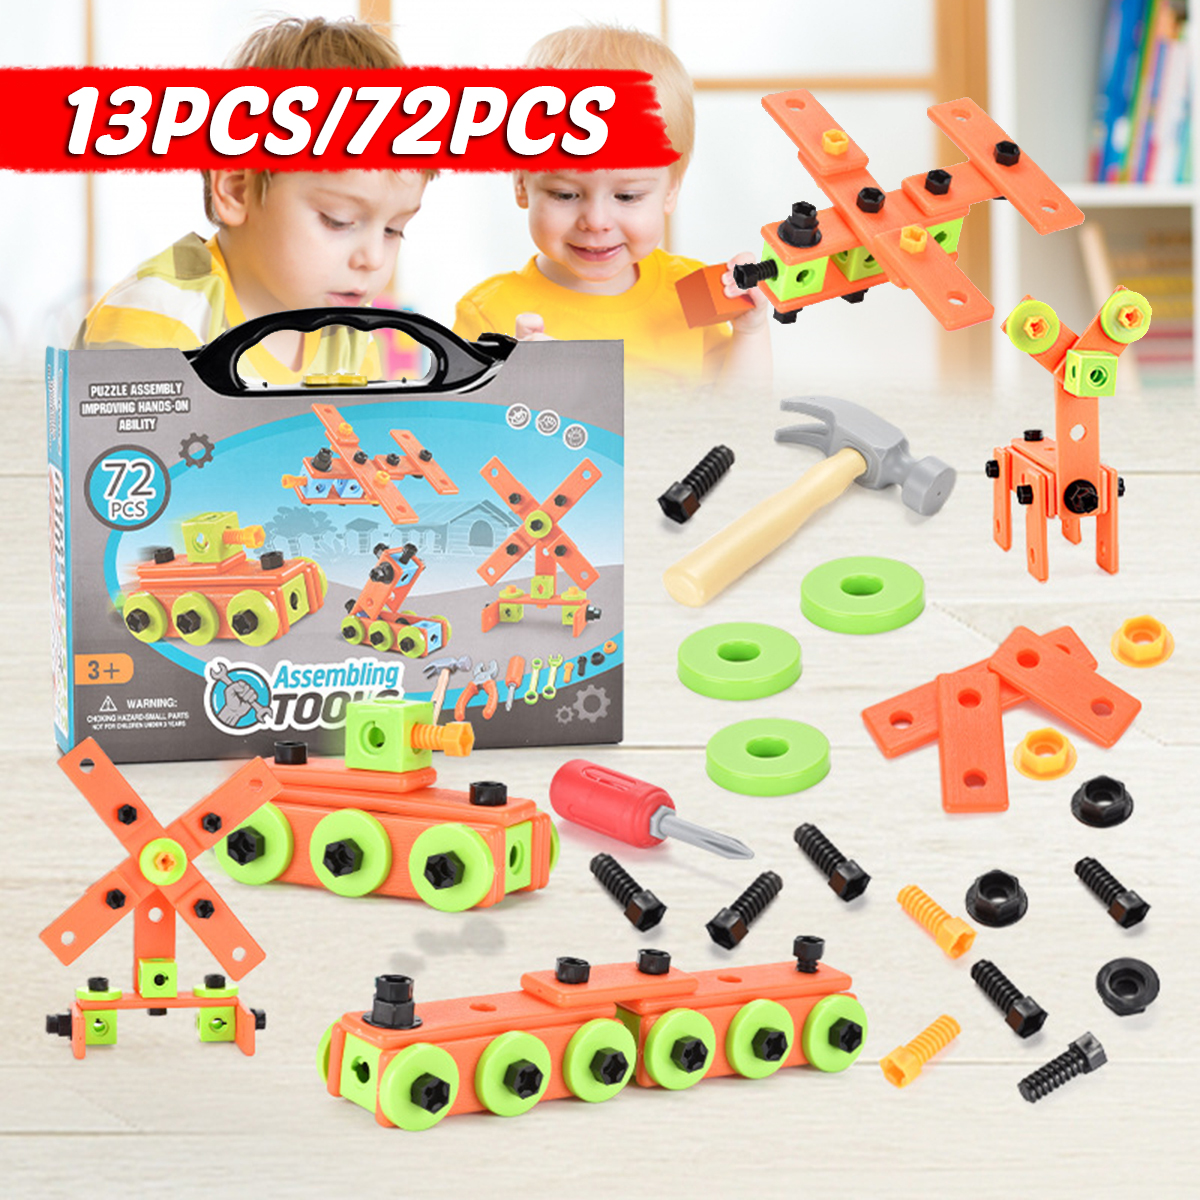 1372Pcs-3D-Puzzle-DIY-Asassembly-Screwing-Blocks-Repair-Tool-Kit-Educational-Toy-for-Kids-Gift-1735098-1